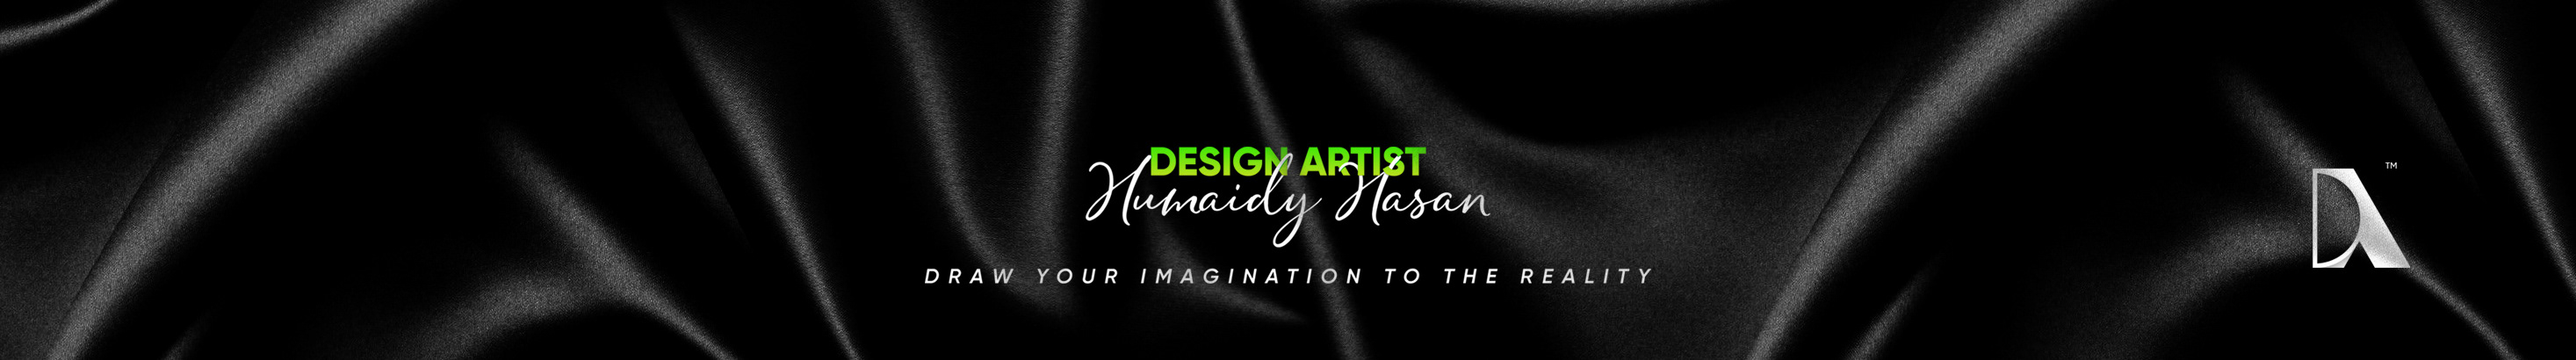 Design Artisan's profile banner